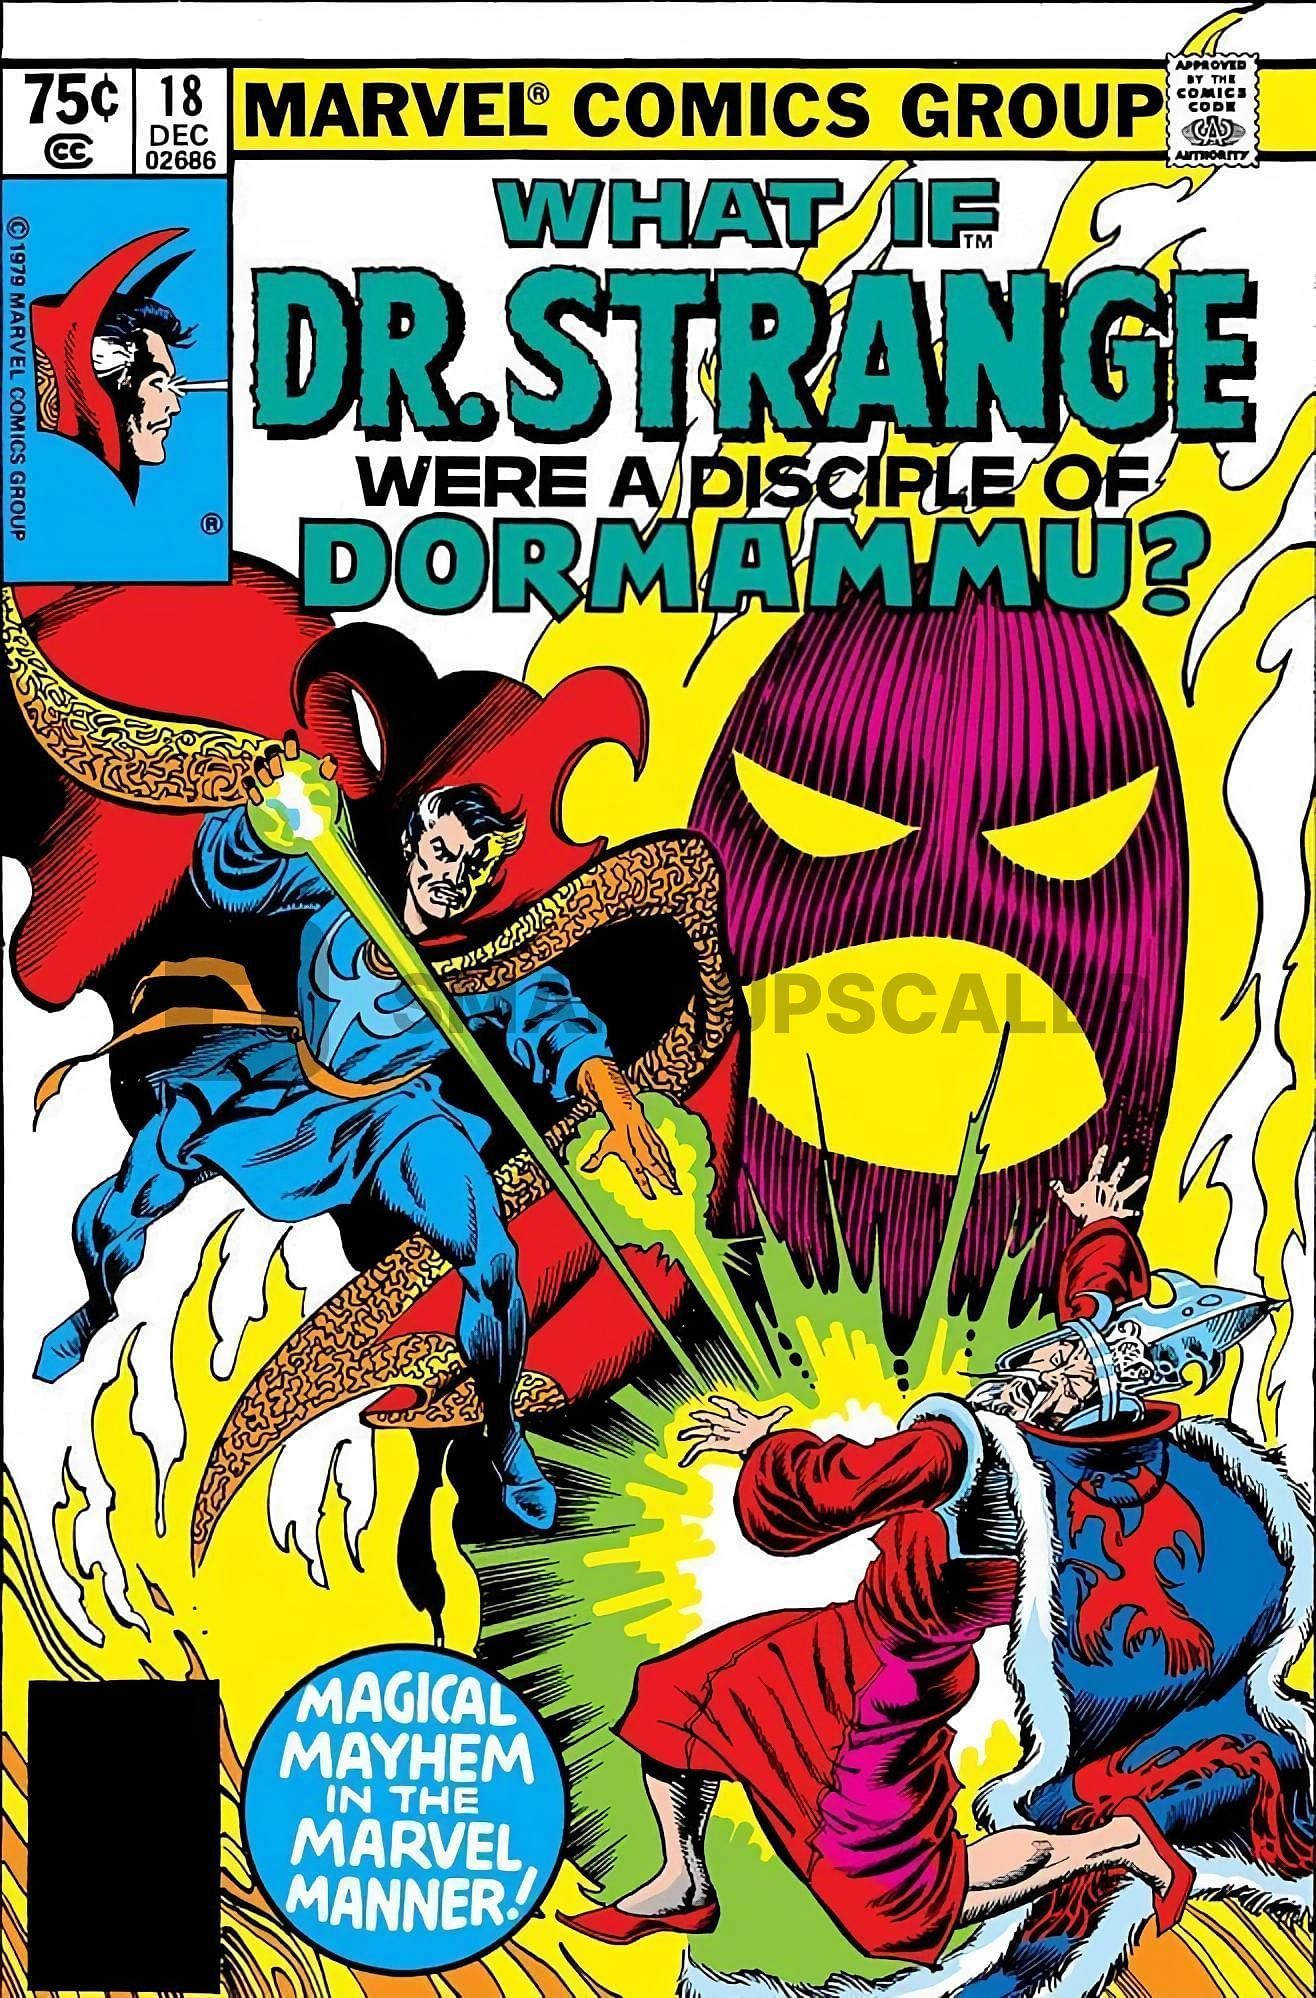 Doctor Strange Disciple of Dormammu Image via (Marvel Comics)